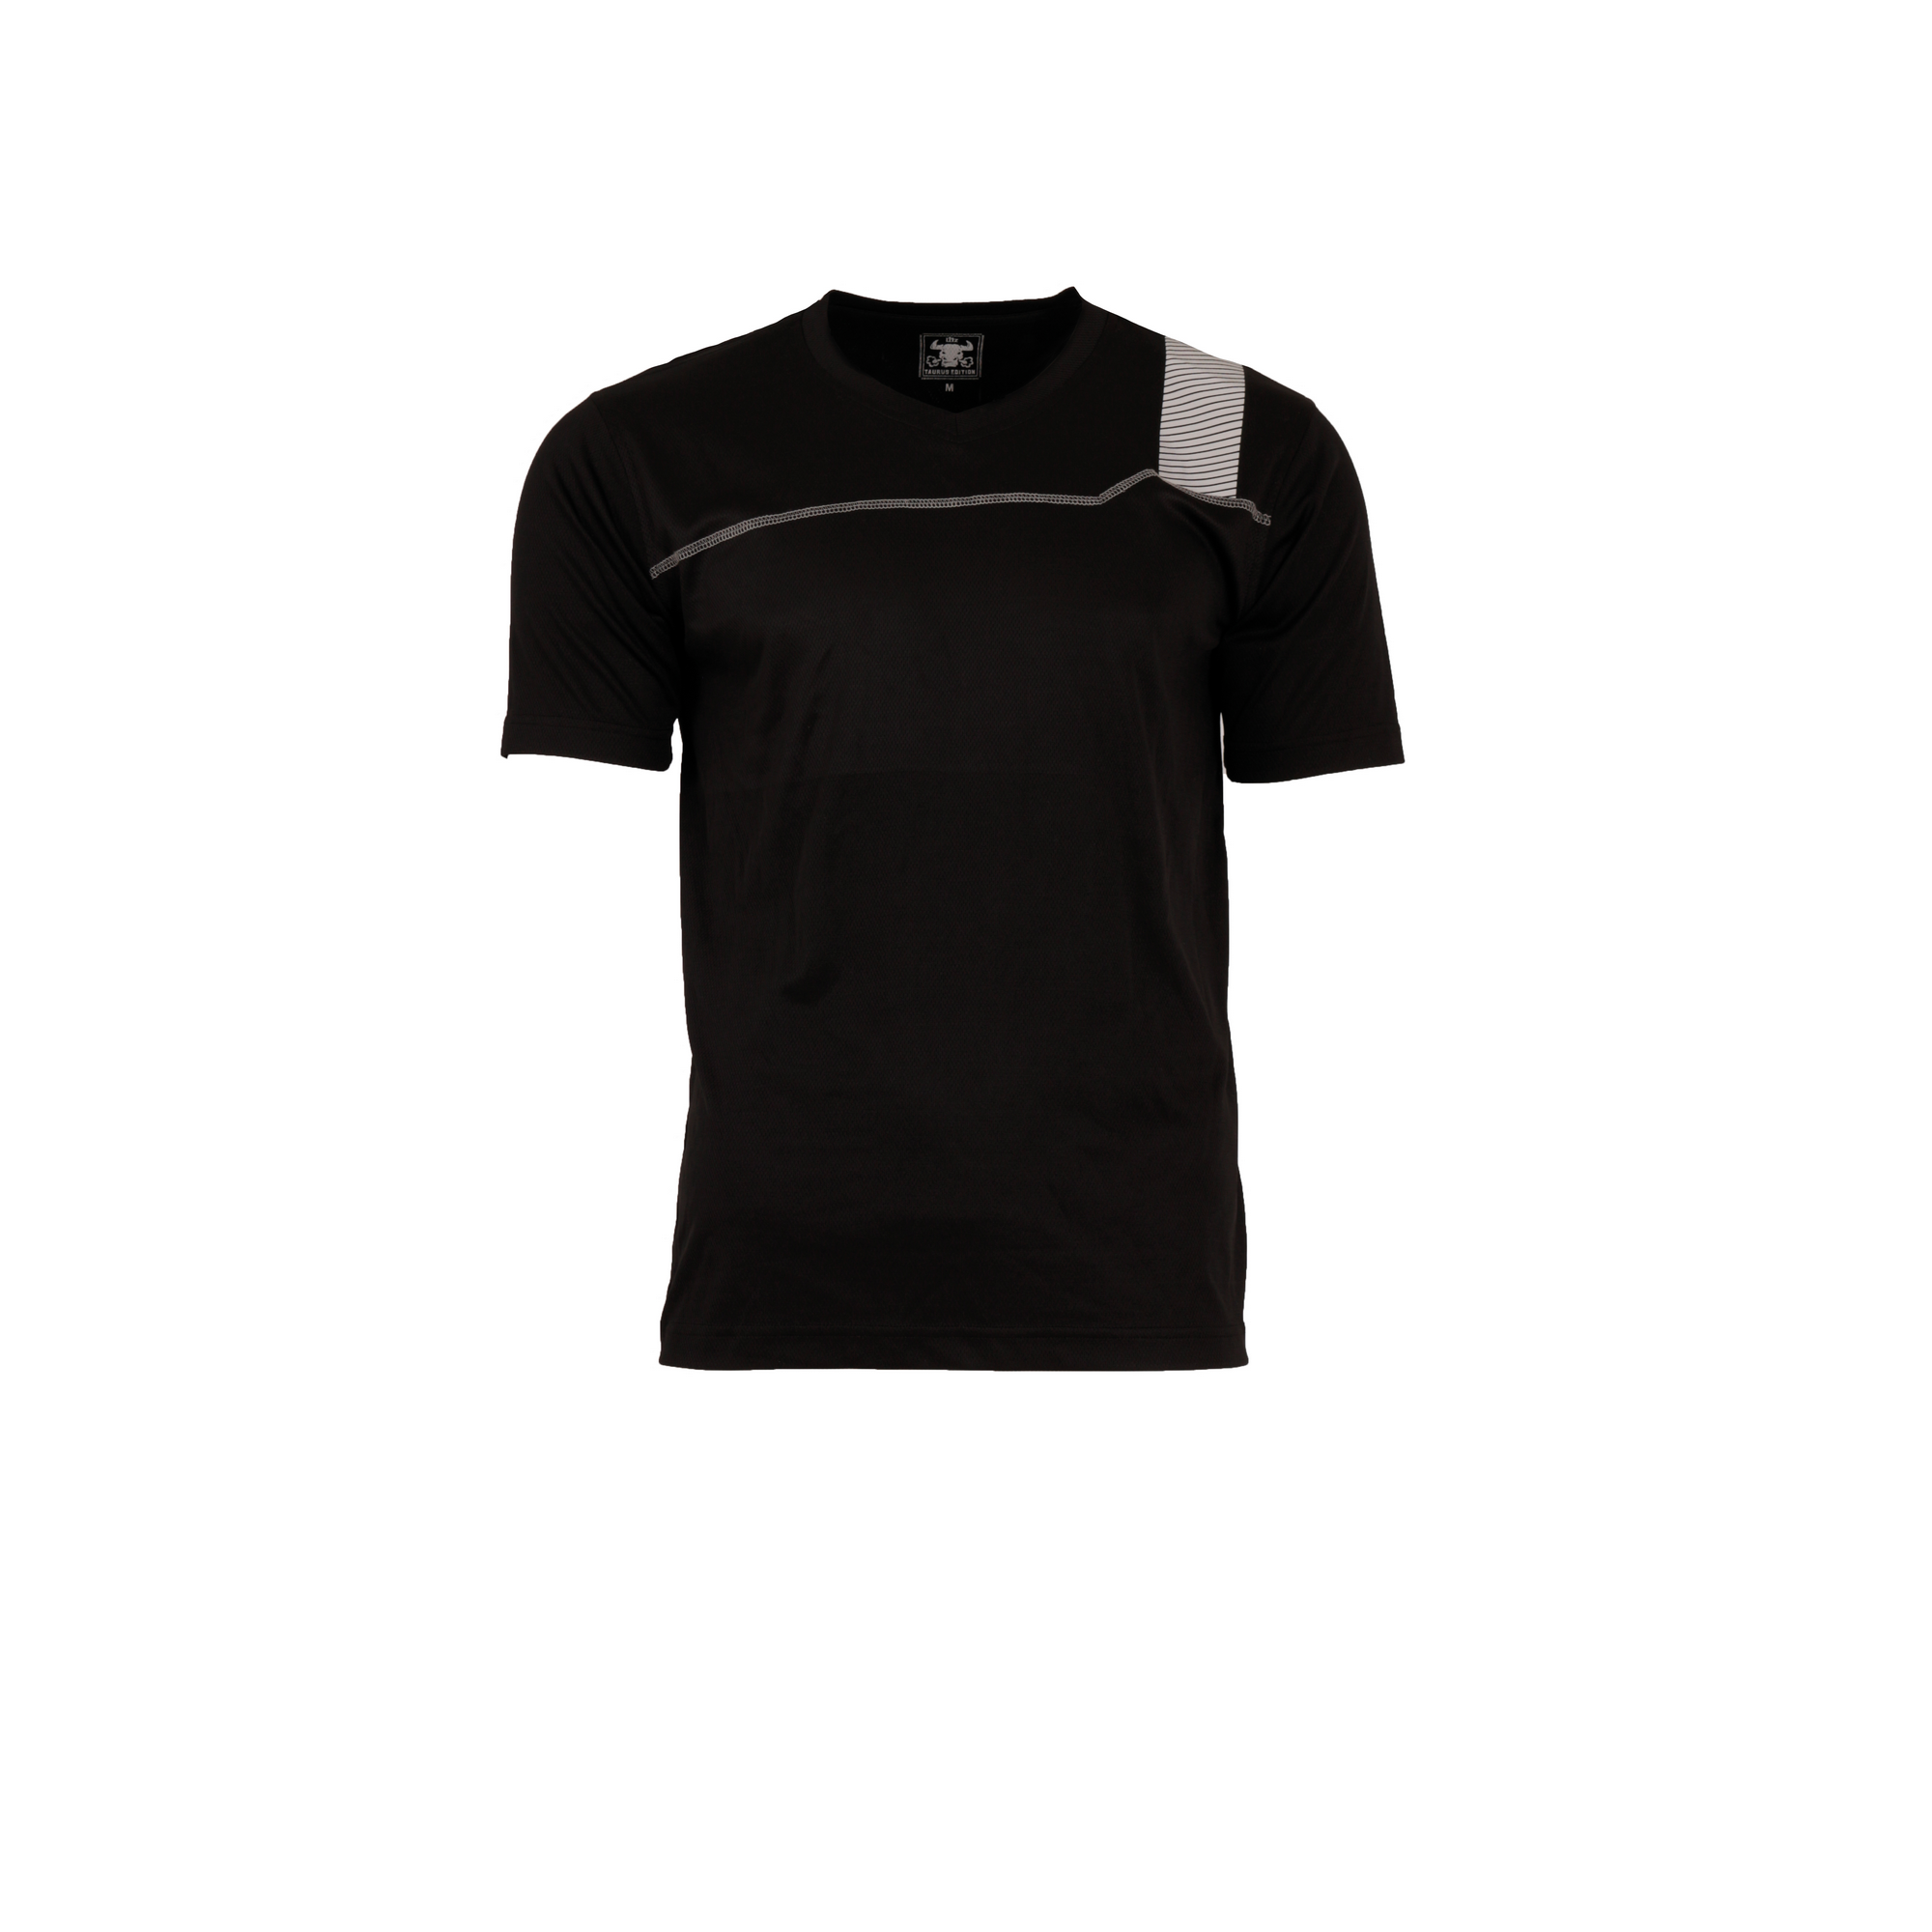 T-Shirt 'Taurus' schwarz L + product picture